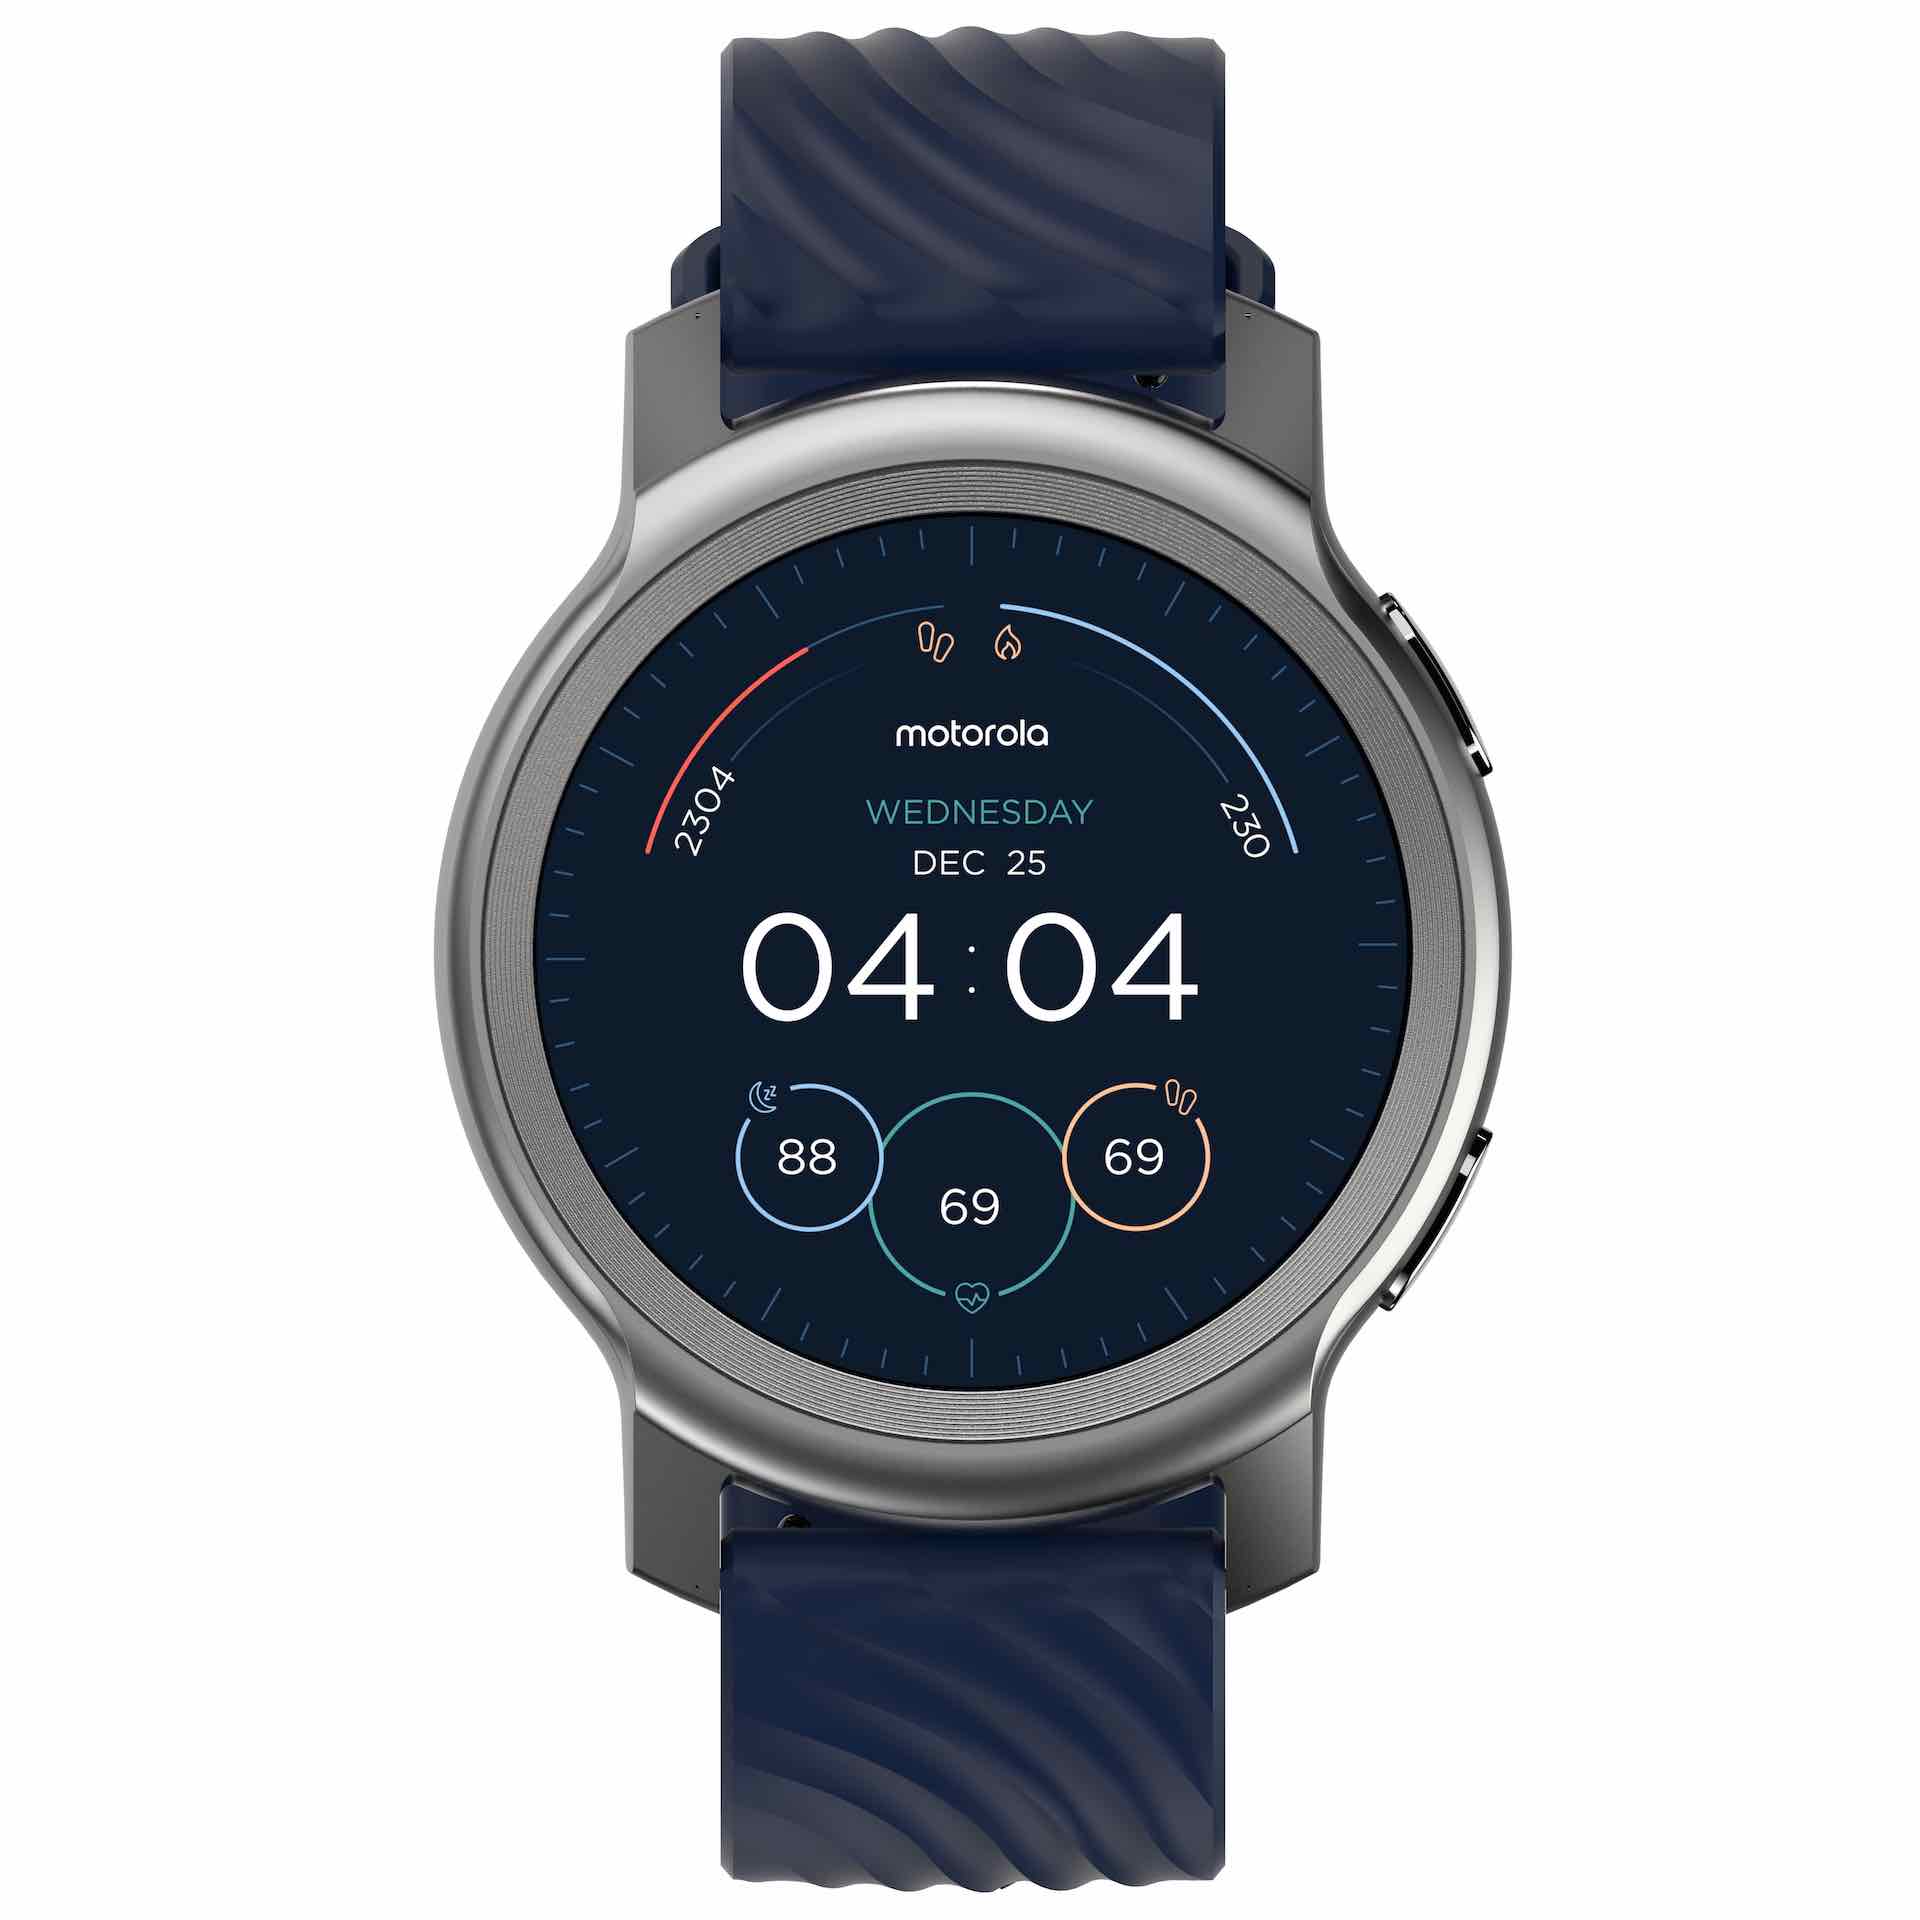 moto watch 100, novo smartwatch da Motorola